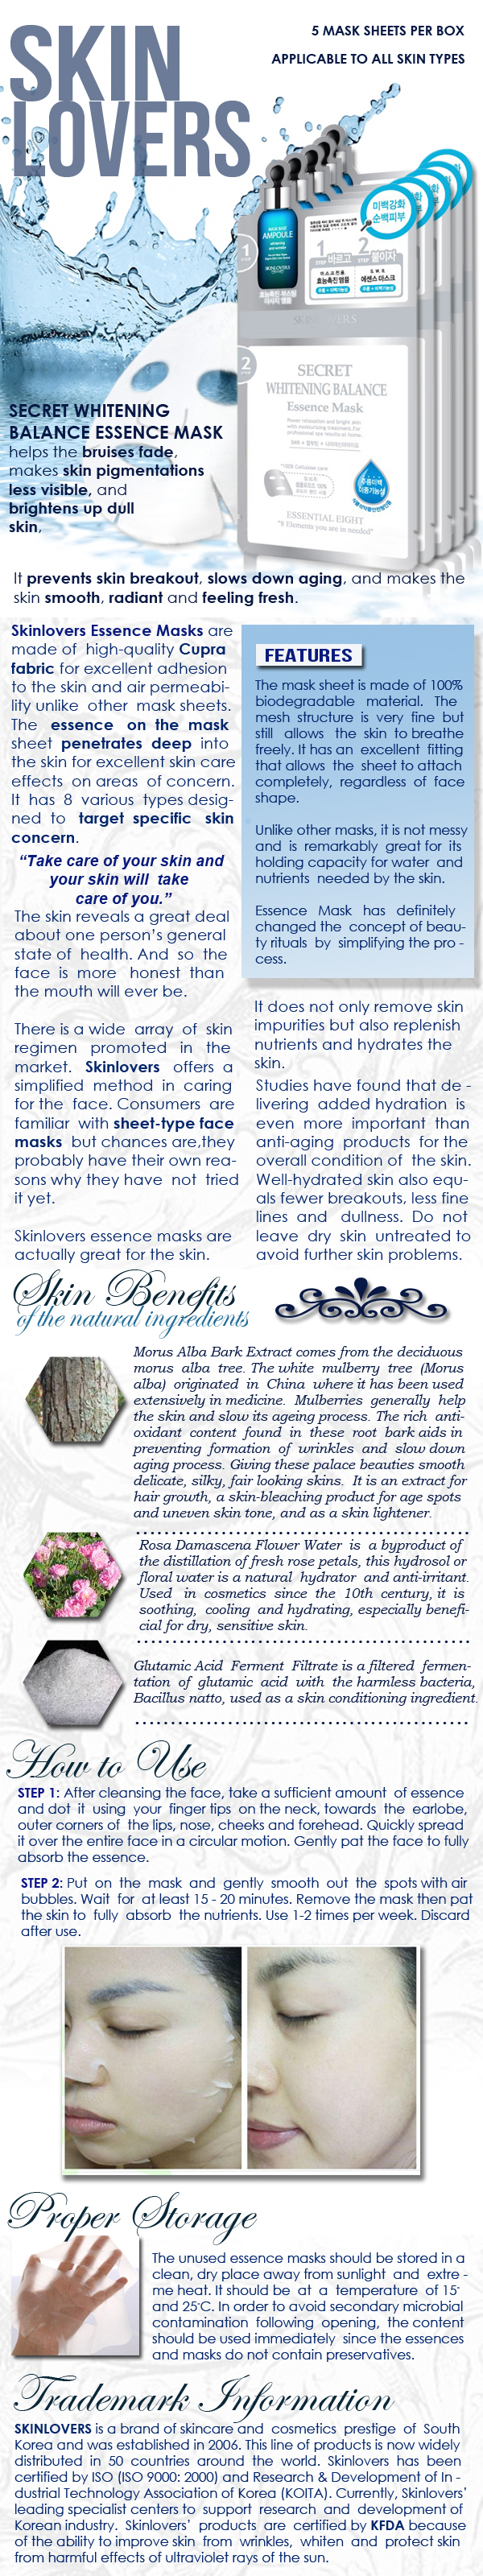 Skinlovers Secret Whitening Balance Essence Mask Product Information